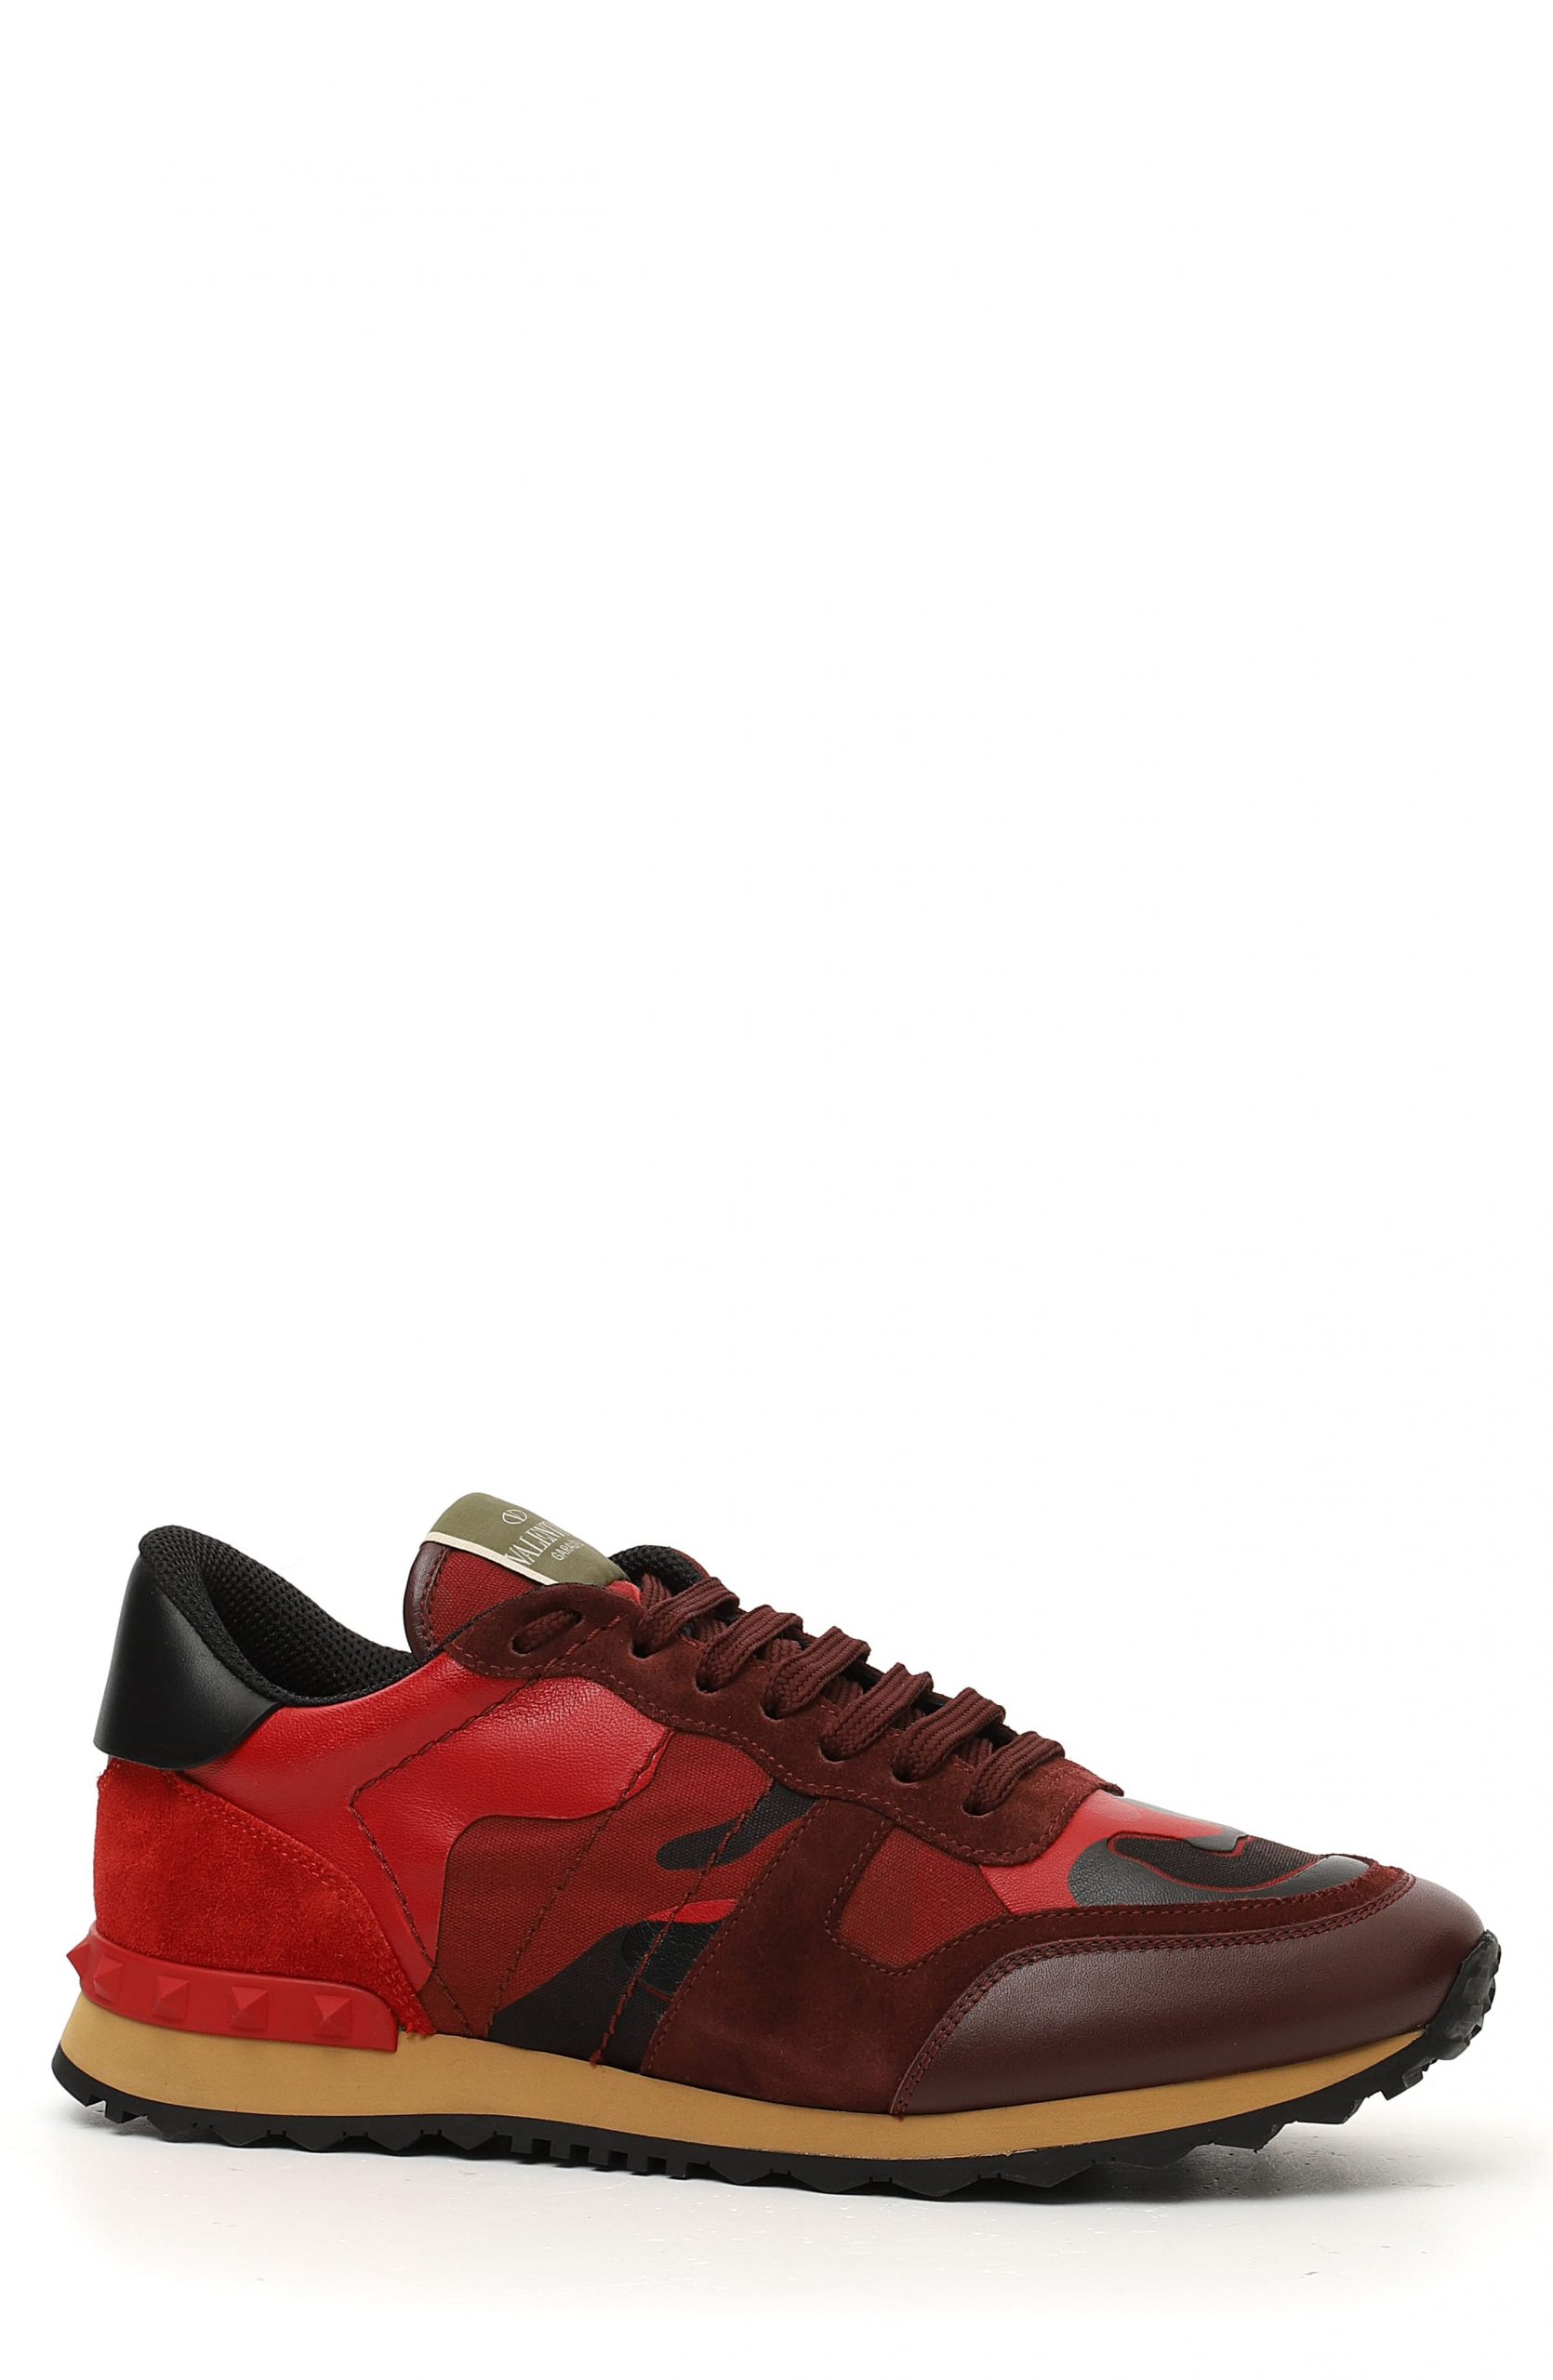 Men’s Valentino Garavani Camo Rockrunner Sneaker, Size 6US - Red | The ...